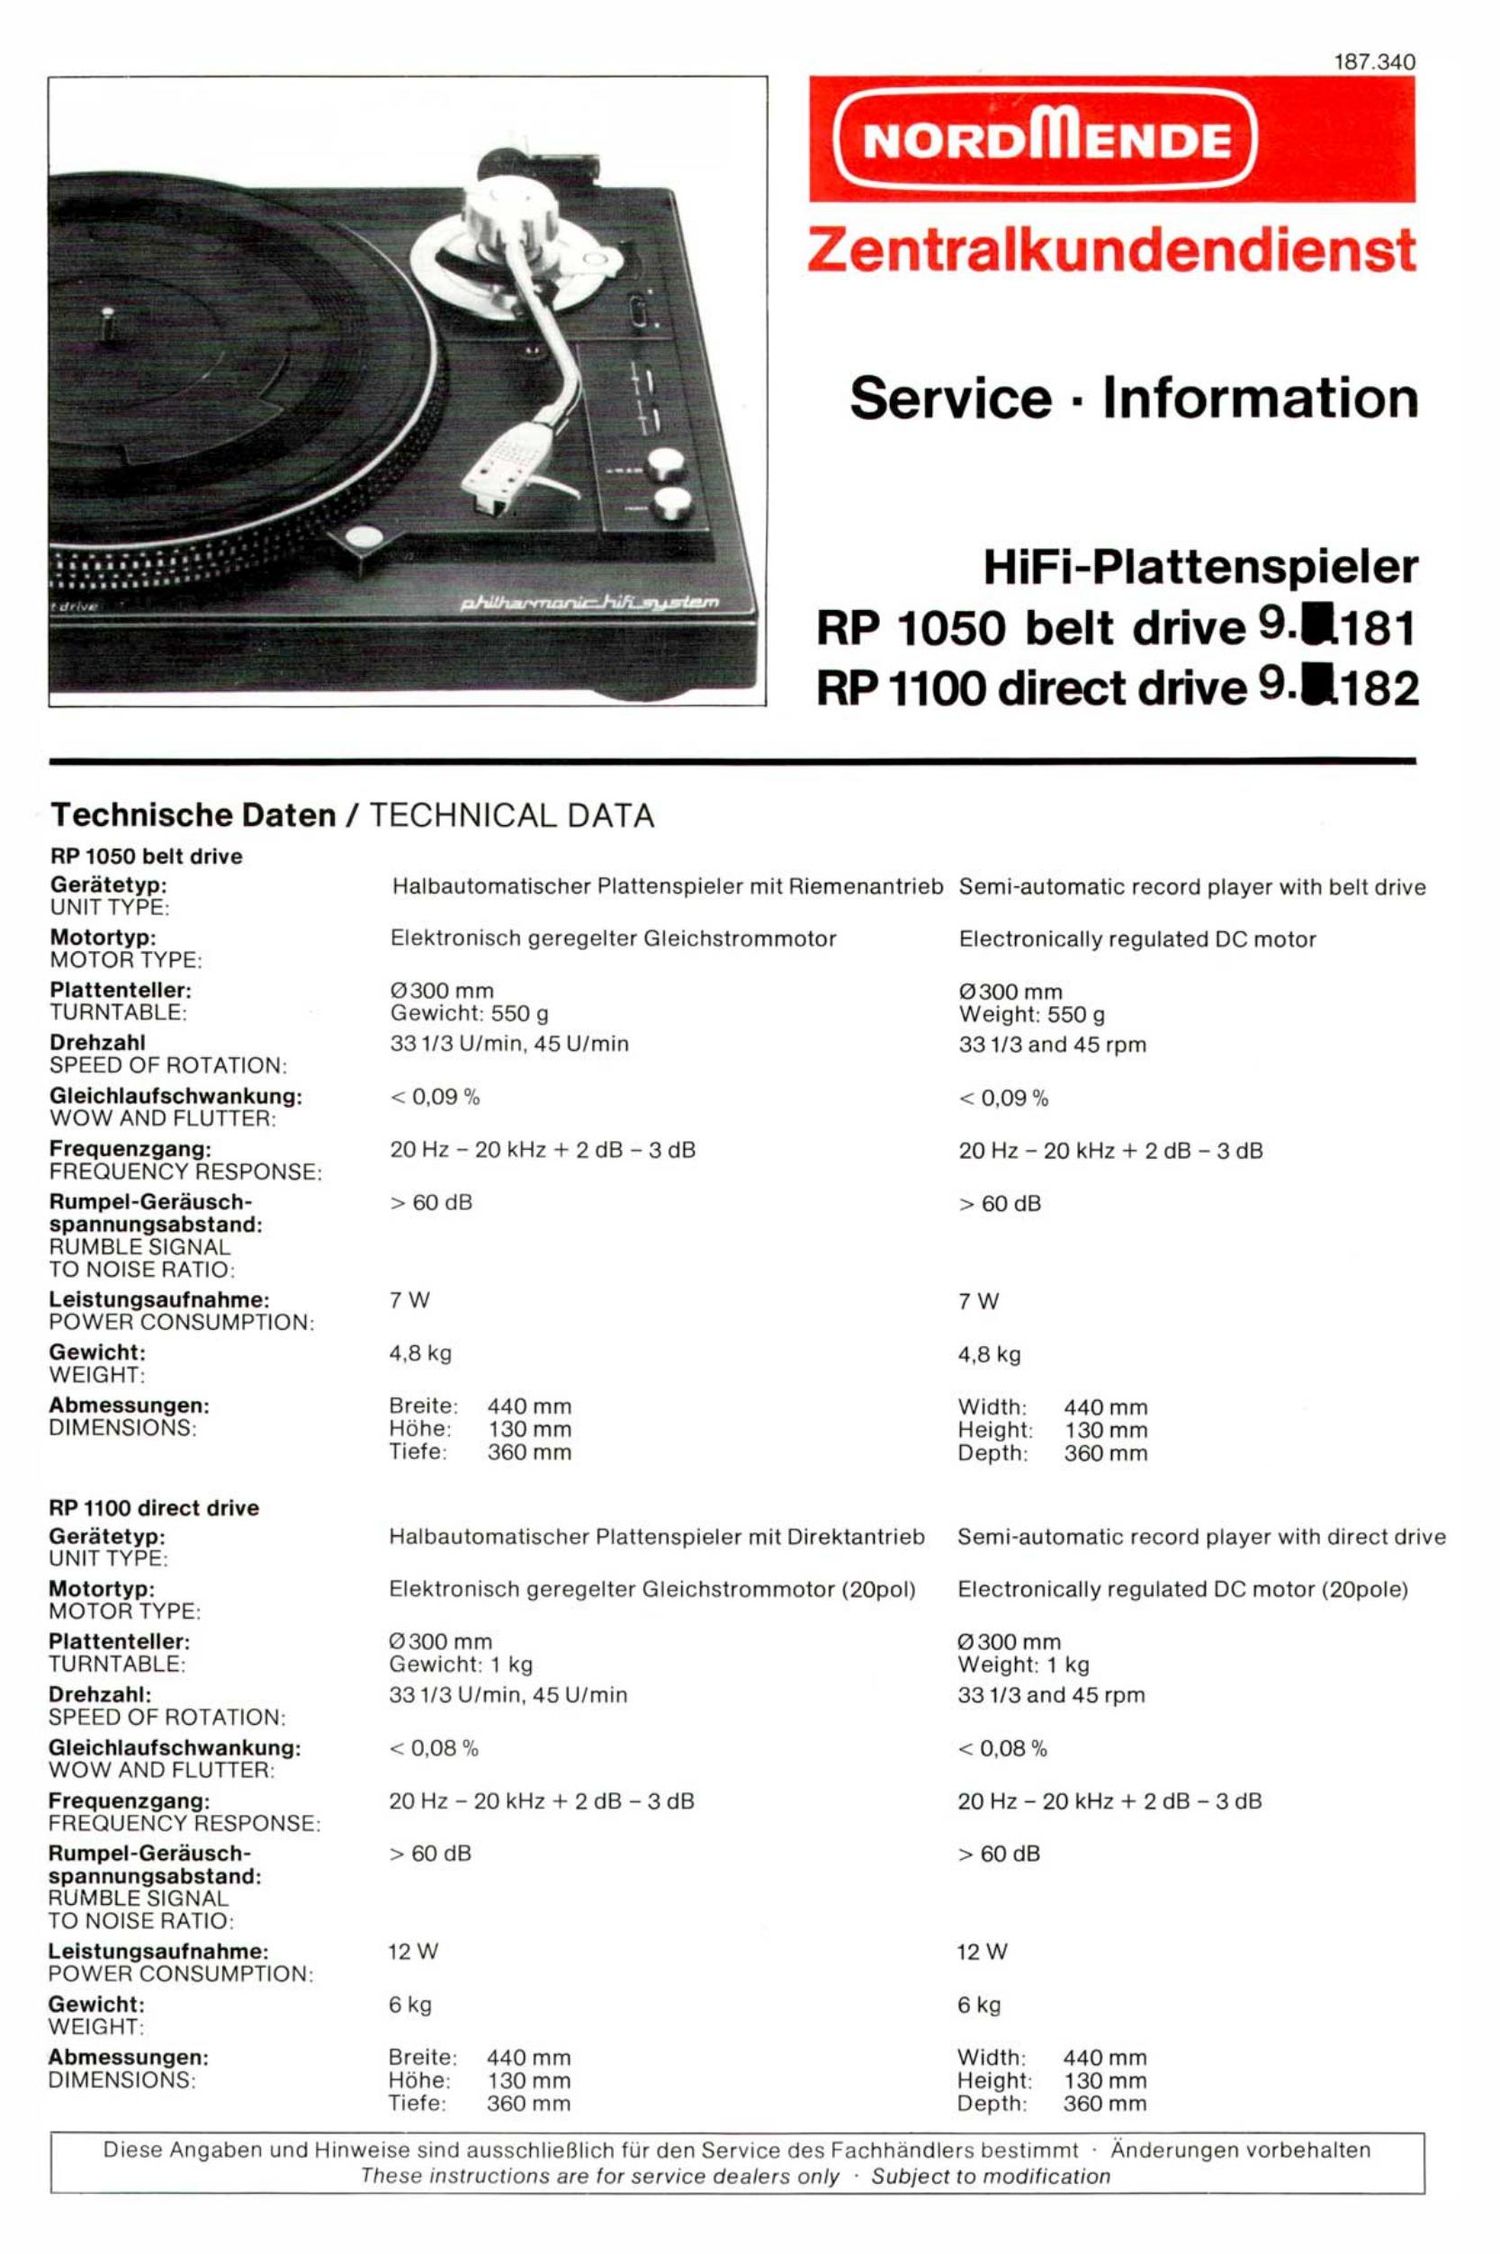 Nordmende RP 1050 RP 1100 Service Information